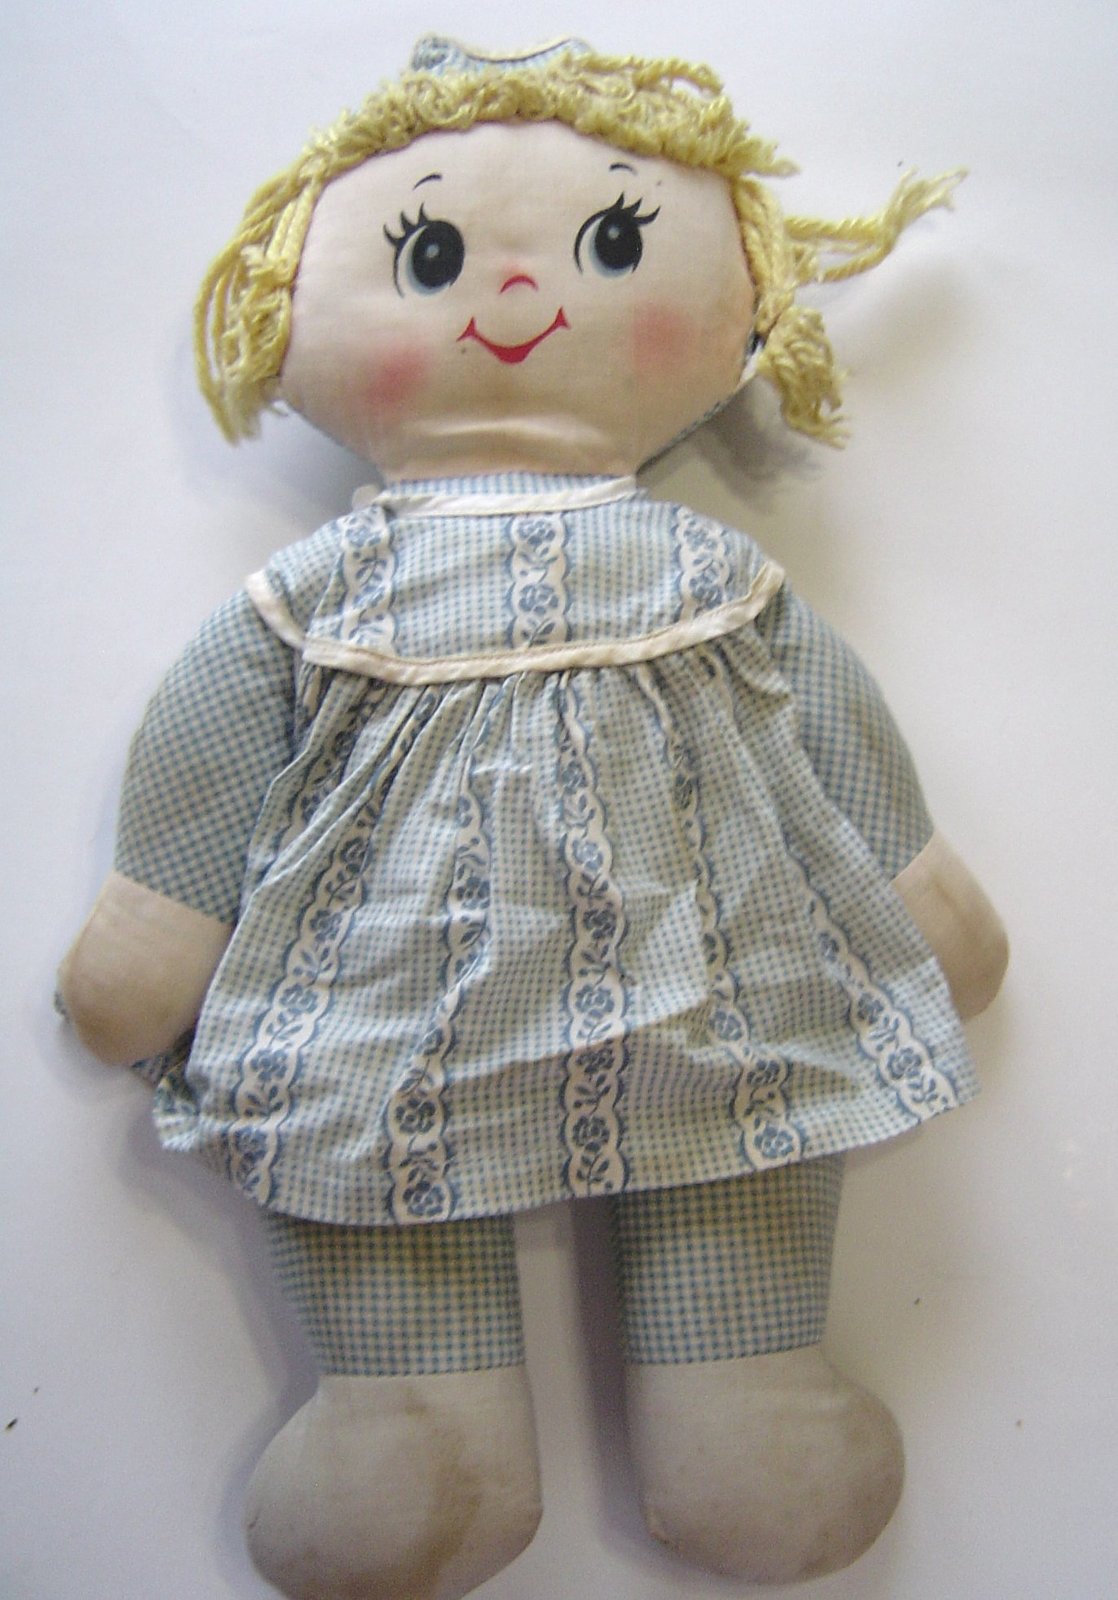   Vintage Knickerbocker Kuddles Doll 1960's - $49.99